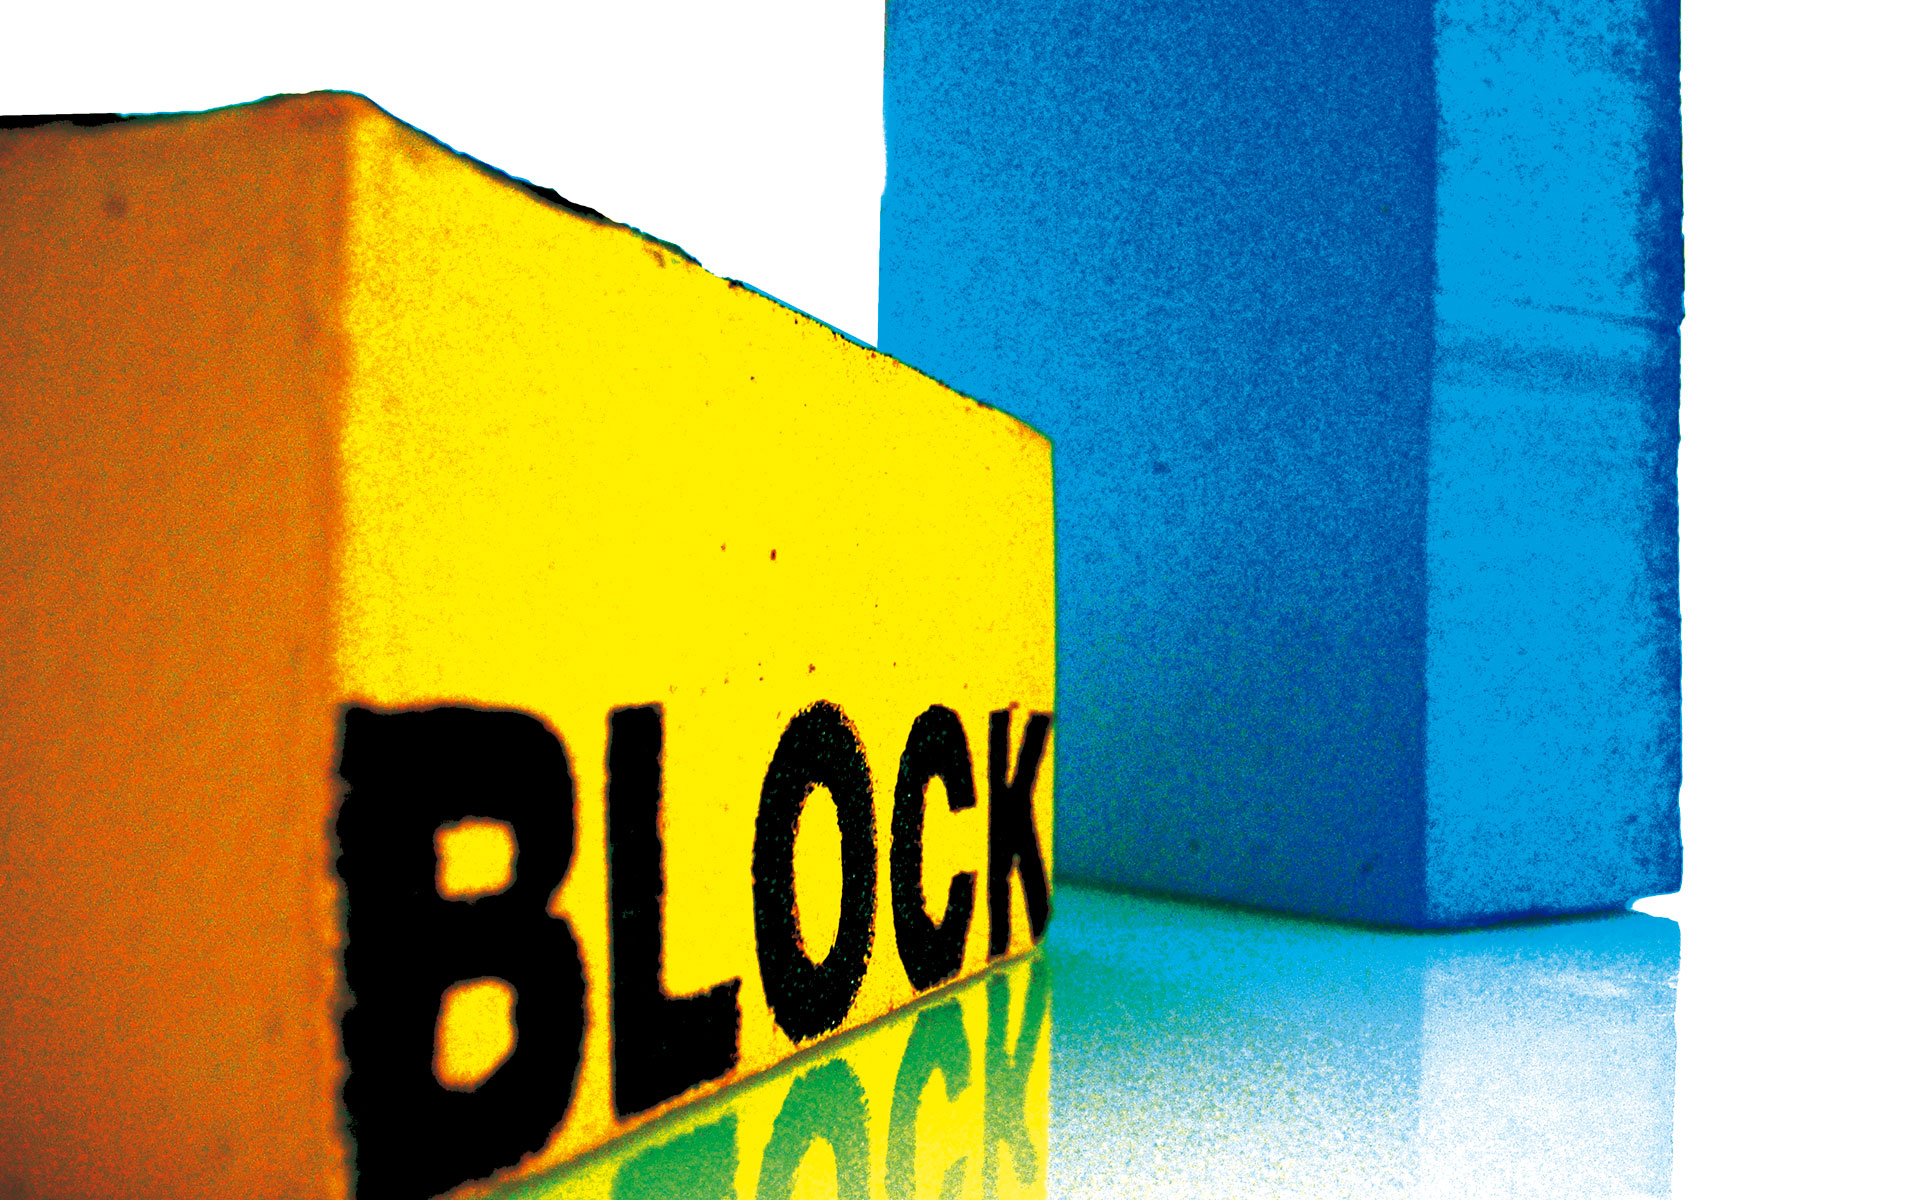 Block